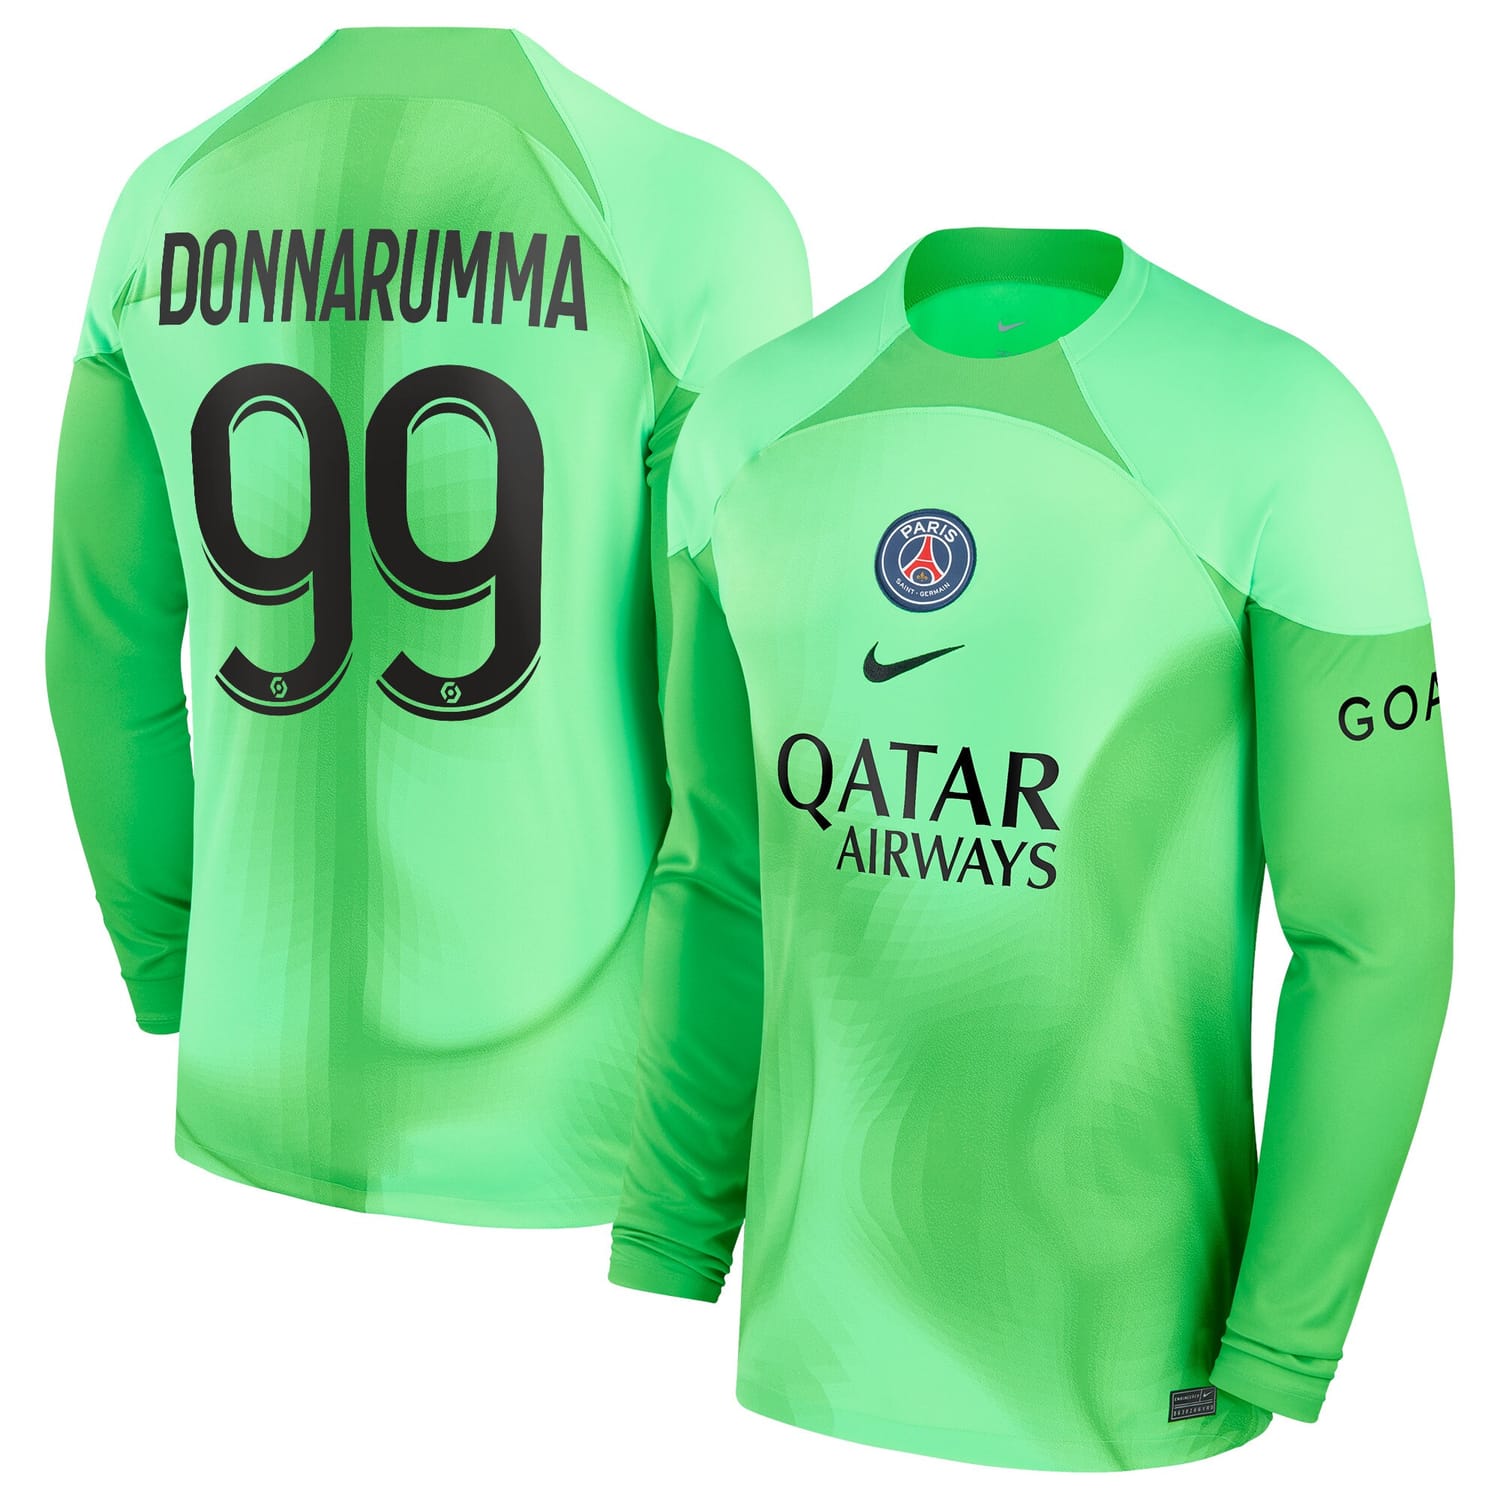 Ligue 1 Paris Saint-Germain Home Goalkeeper Jersey Shirt 2022-23 player Gianluigi Donnarumma 99 printing for Men